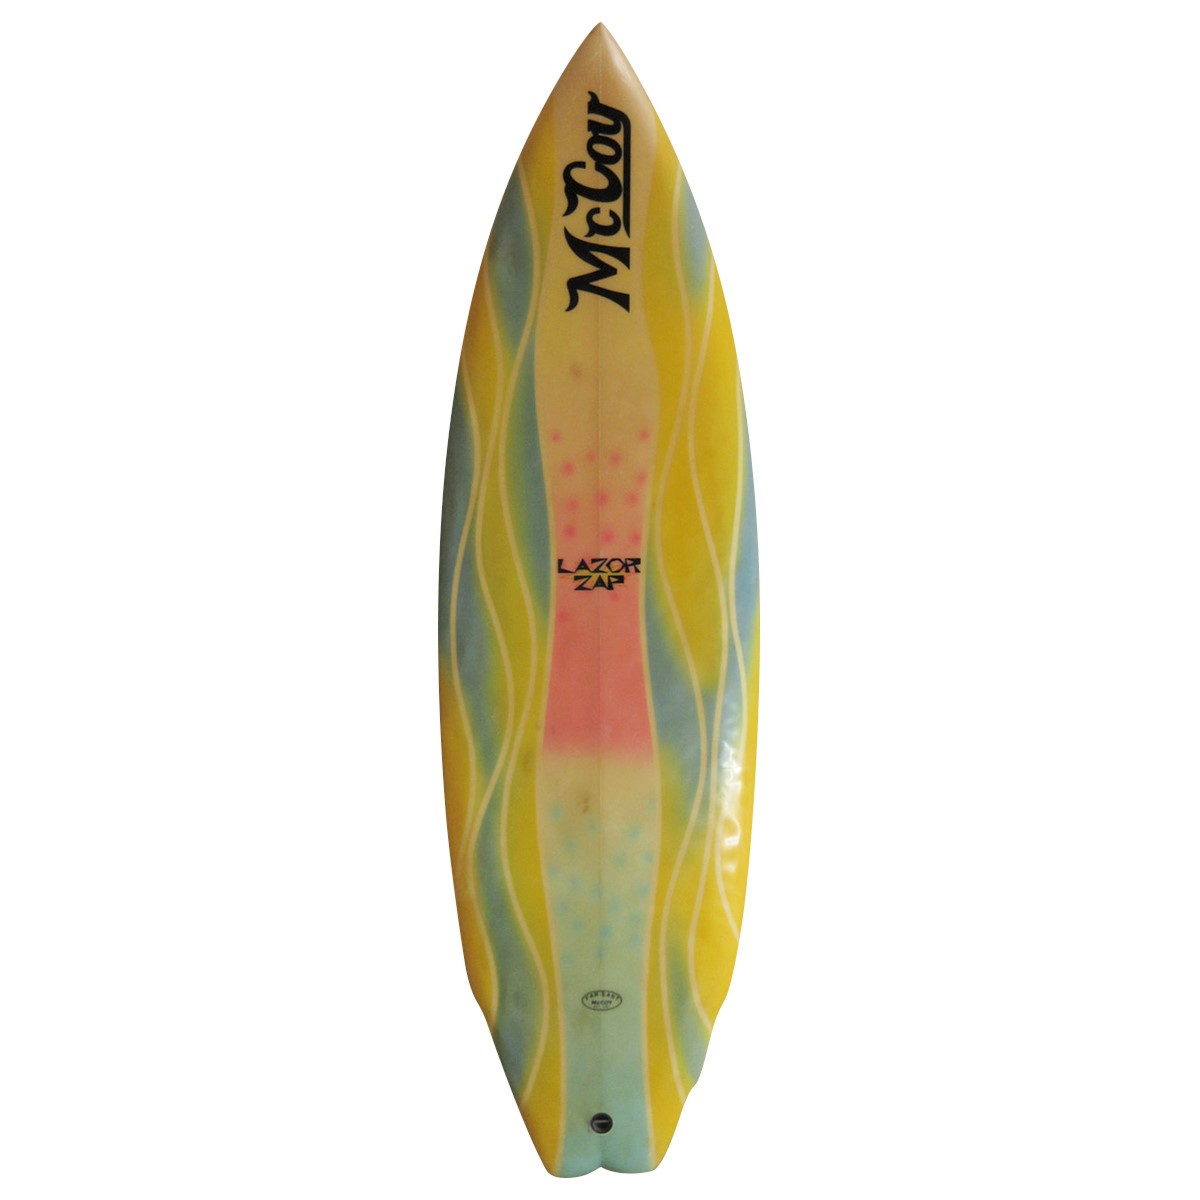 McCOY / LAZOR ZAP 5`9 TWIN | USED SURF×SURF MARKET